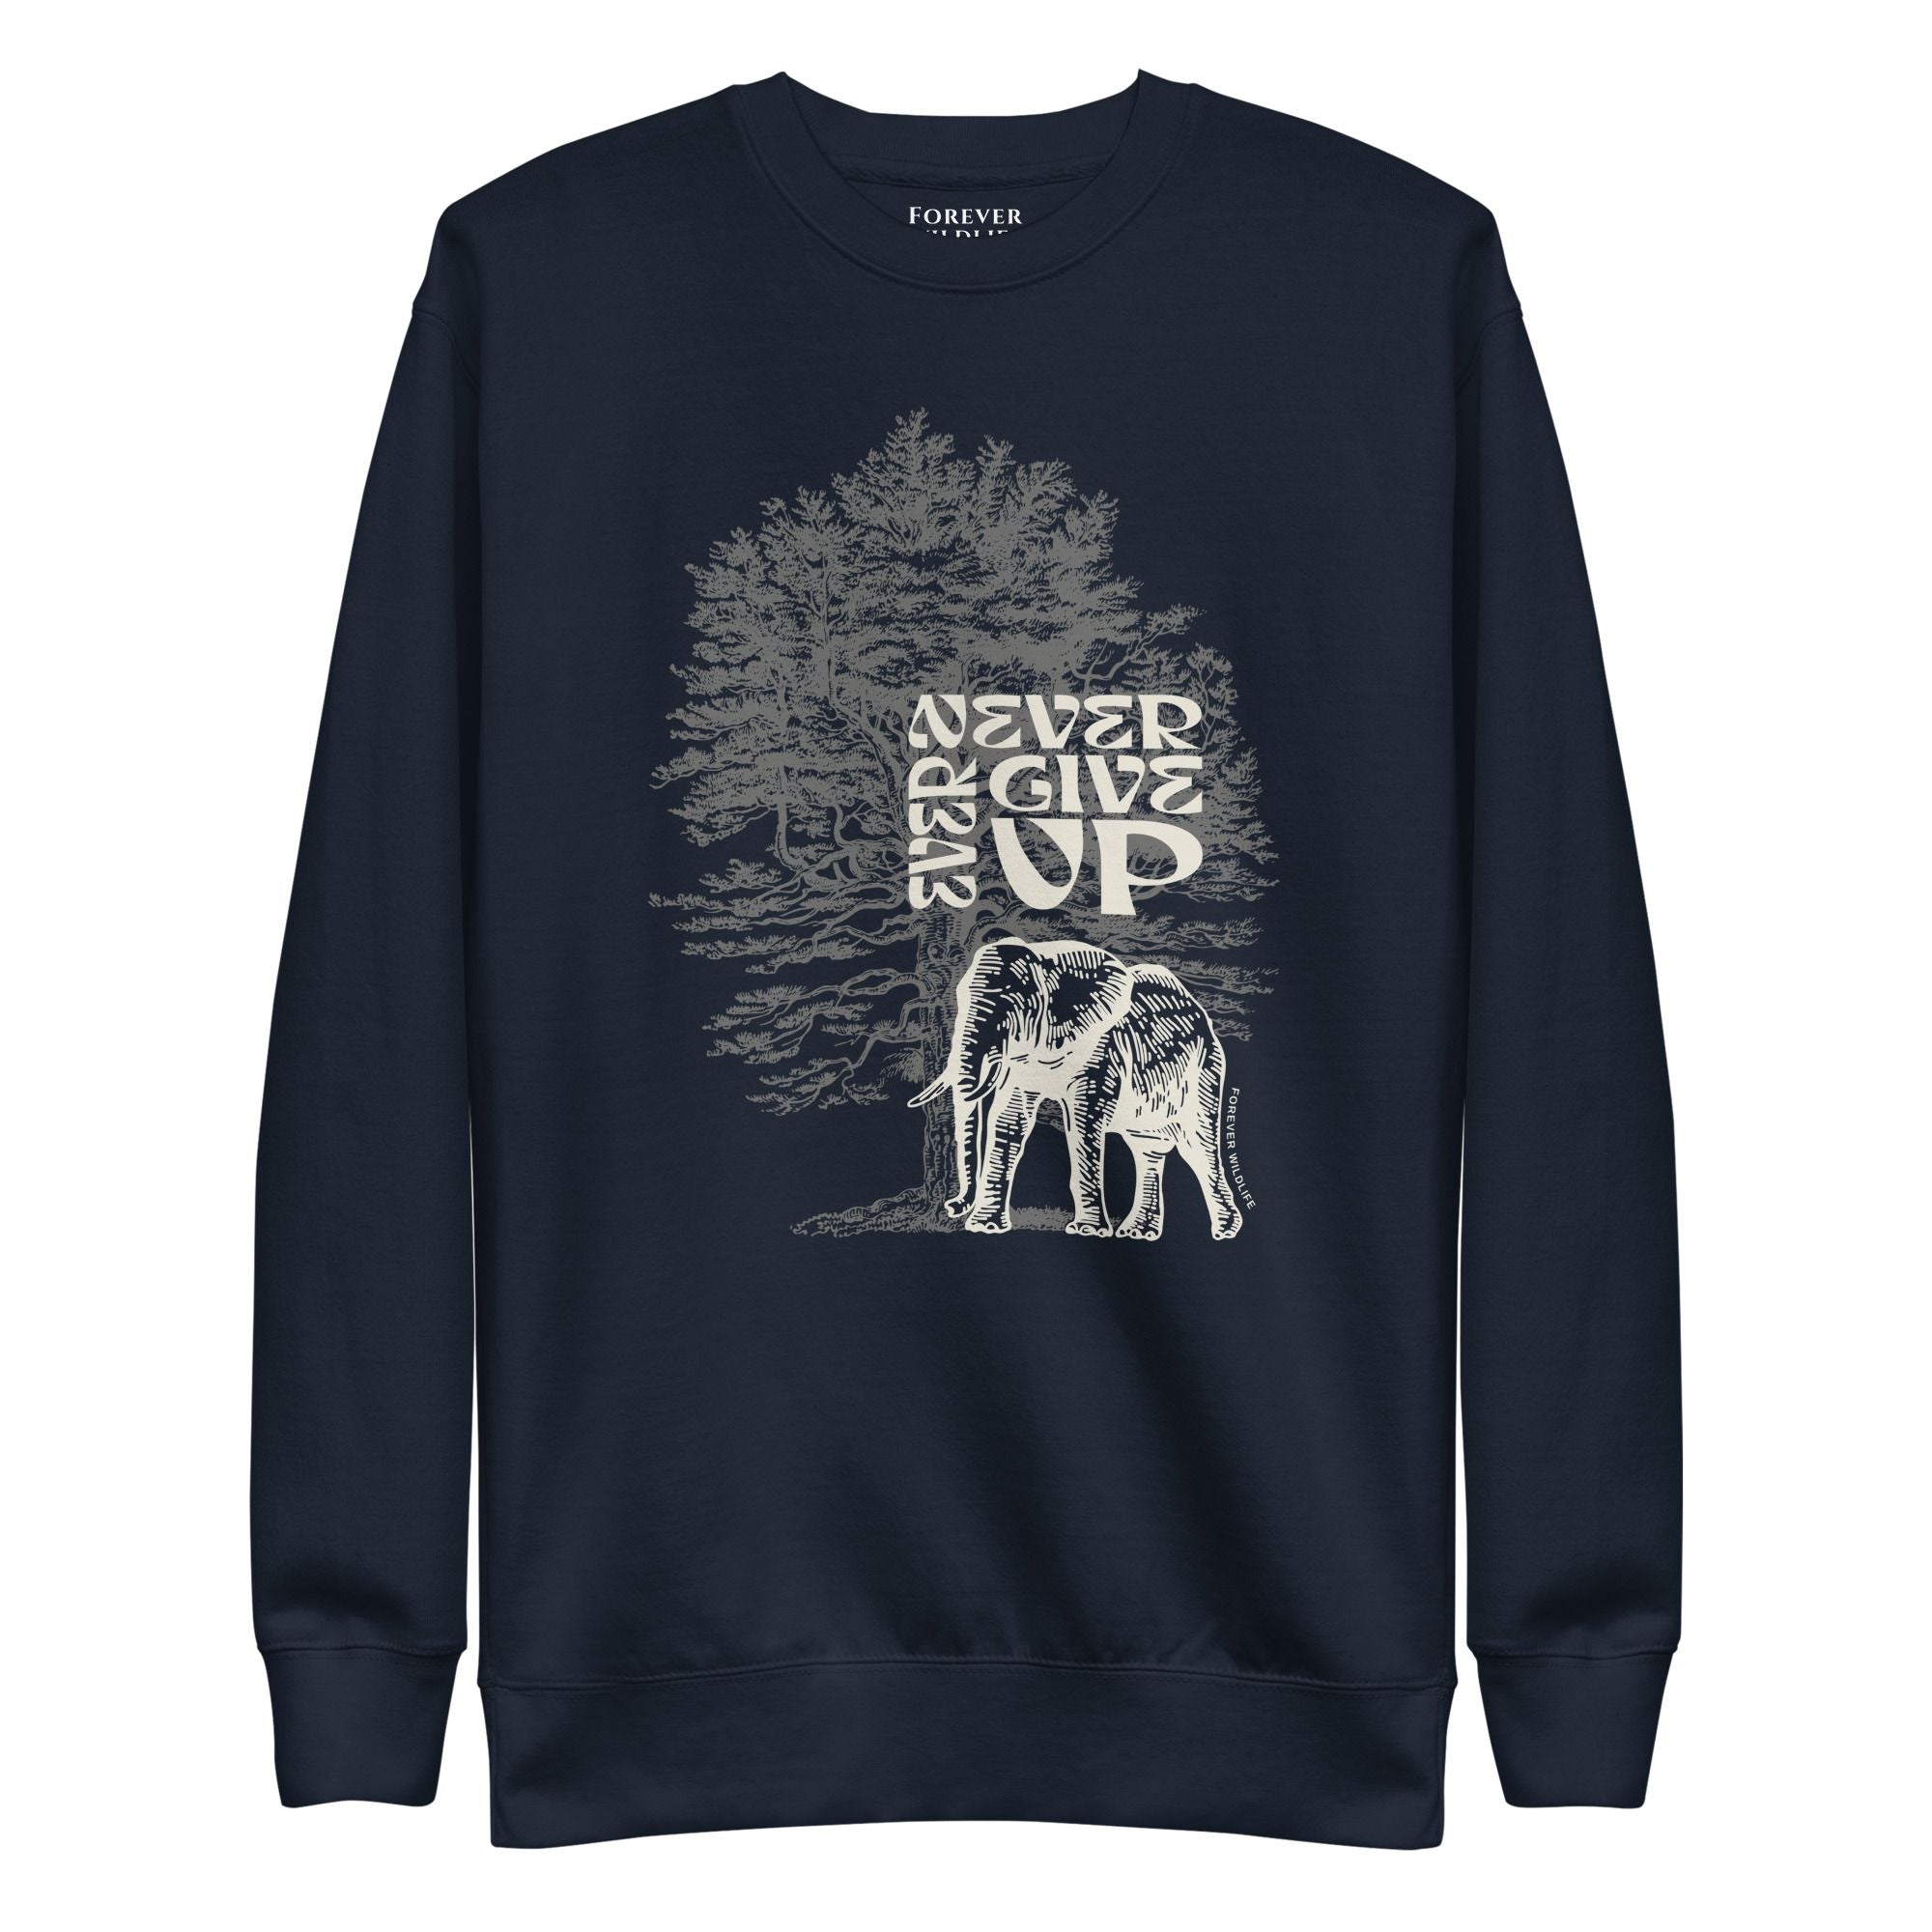 Elephant Sweatshirt in Navy-Premium Wildlife Animal Inspiration Sweatshirt Design with 'Never Ever Give Up' text, part of Wildlife Sweatshirts & Clothing from Forever Wildlife.